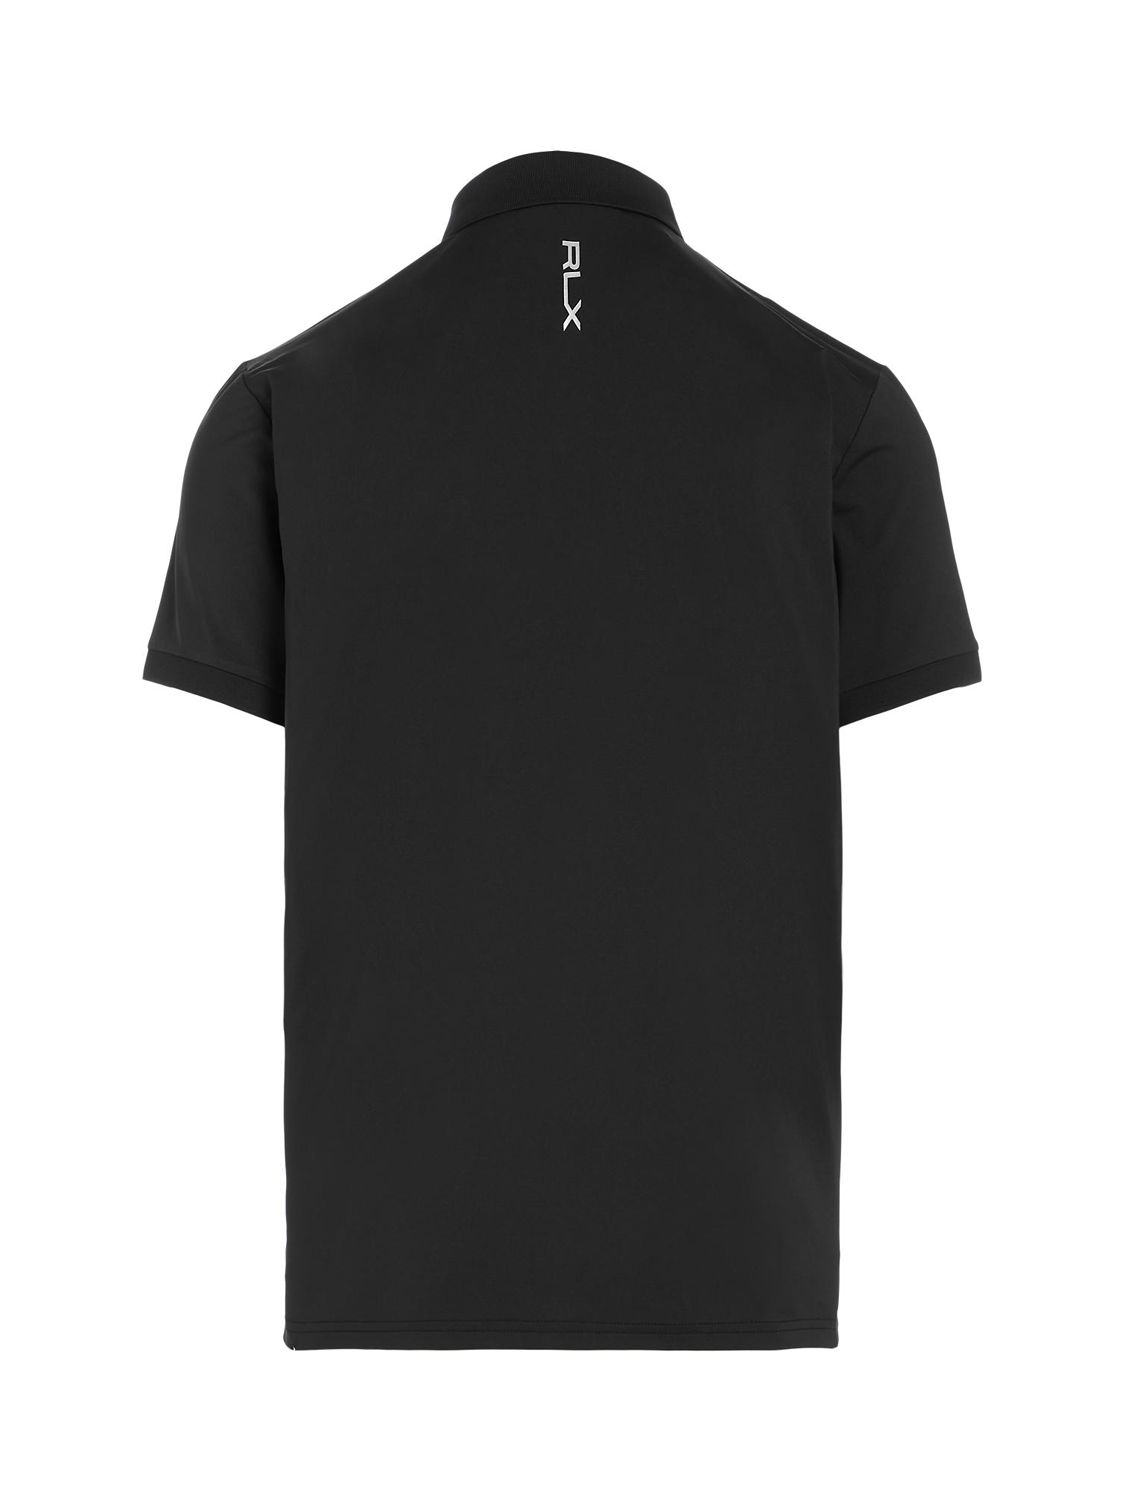 Polo Golf by Ralph Lauren RLX Polo Shirt, Black at John Lewis & Partners